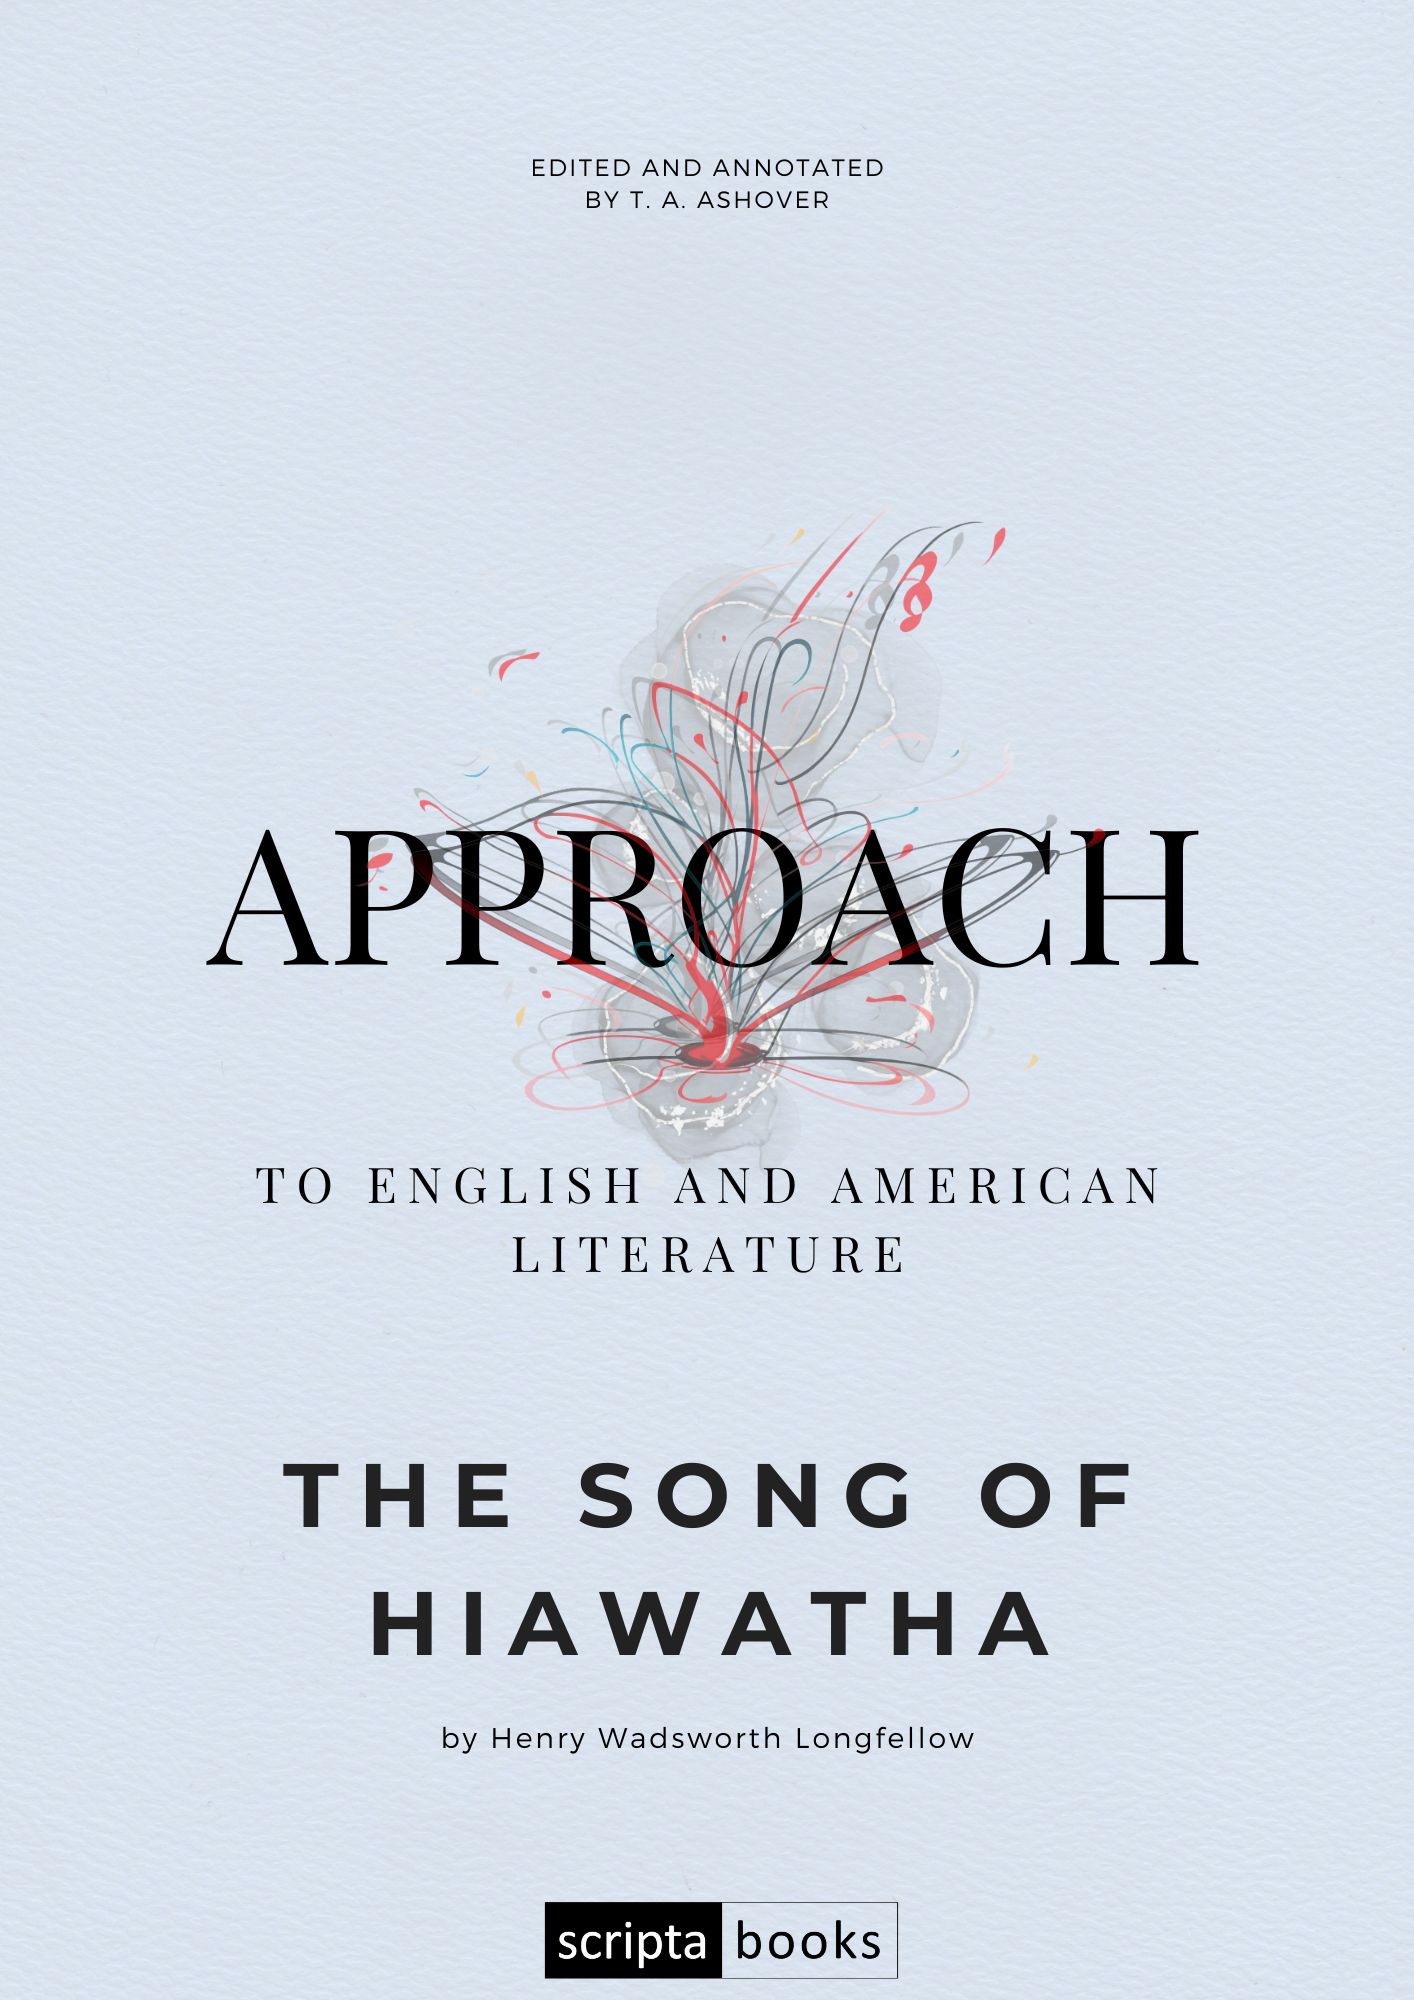 Approach to English and American Literature - The Song of Hiawatha - Διεύρυνση του λεξιλογίου και της κατανόησης κειμένου μέσα από έργα της Αγγλικής και Αμερικανικής Λογοτεχνίας